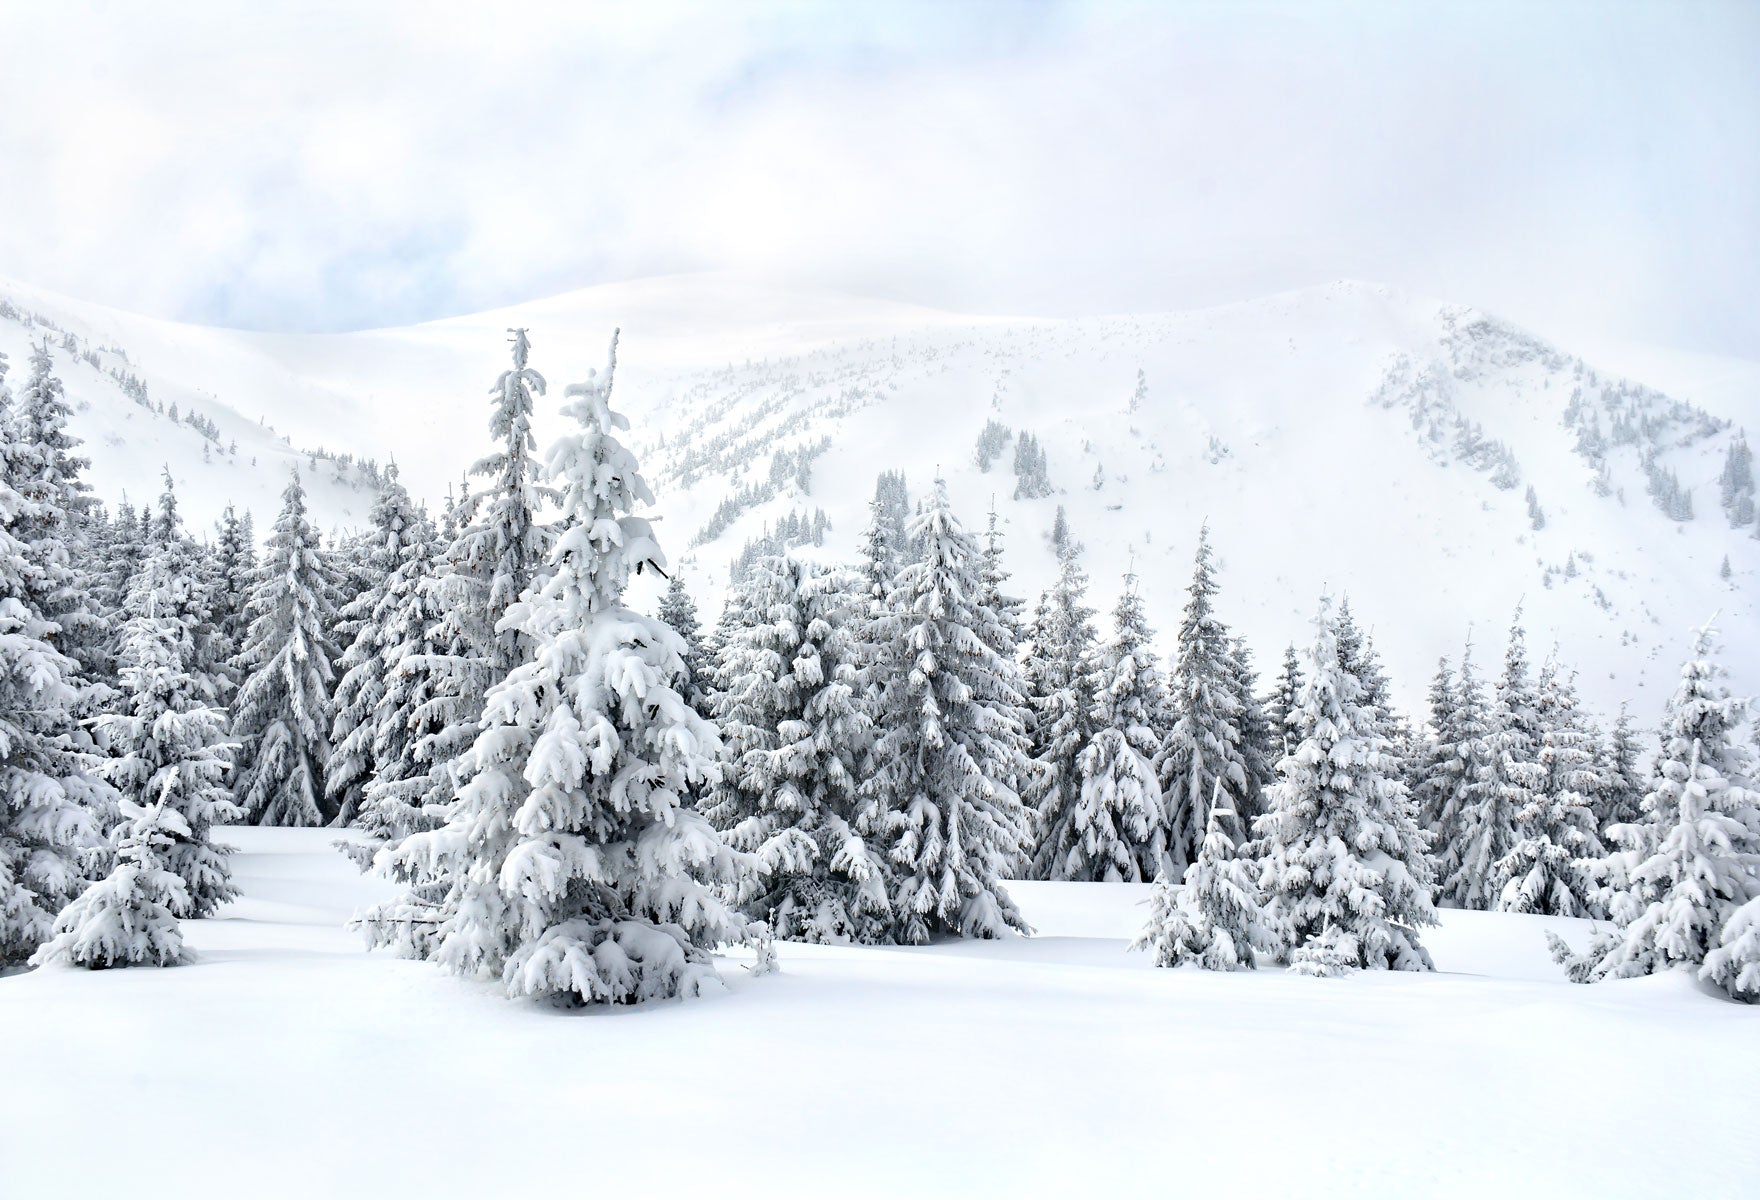 Fox Rolled Winter Snow Trees Vinyl Photography Backdrop - Foxbackdrop